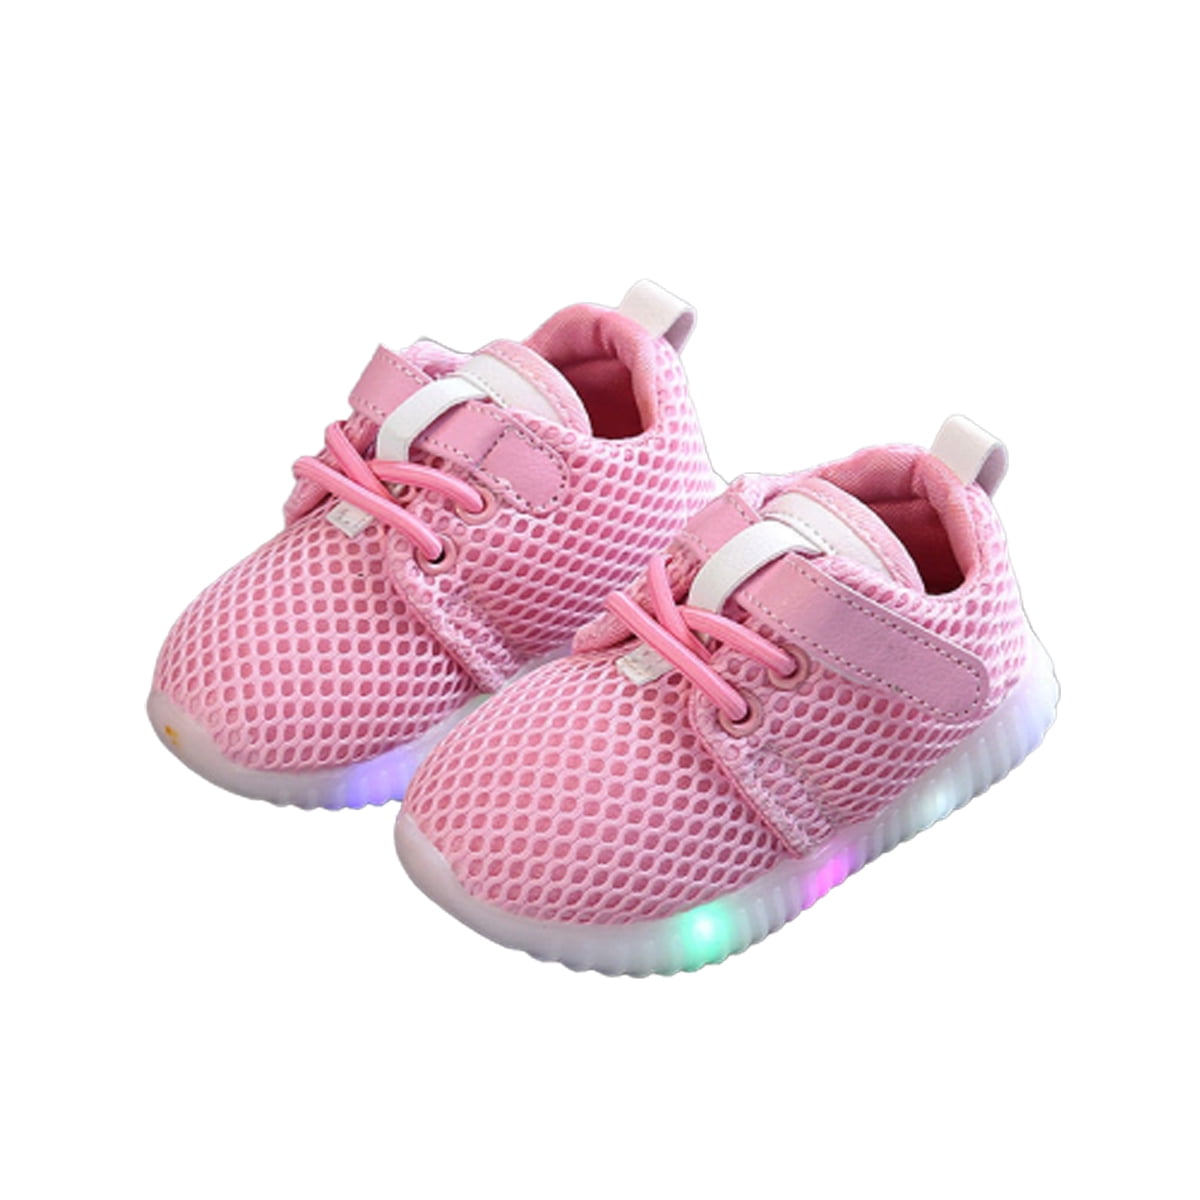 Kids Running Shoes Sneakers LED Light Up Luminous Sport Trainer Baby Boys Girls 